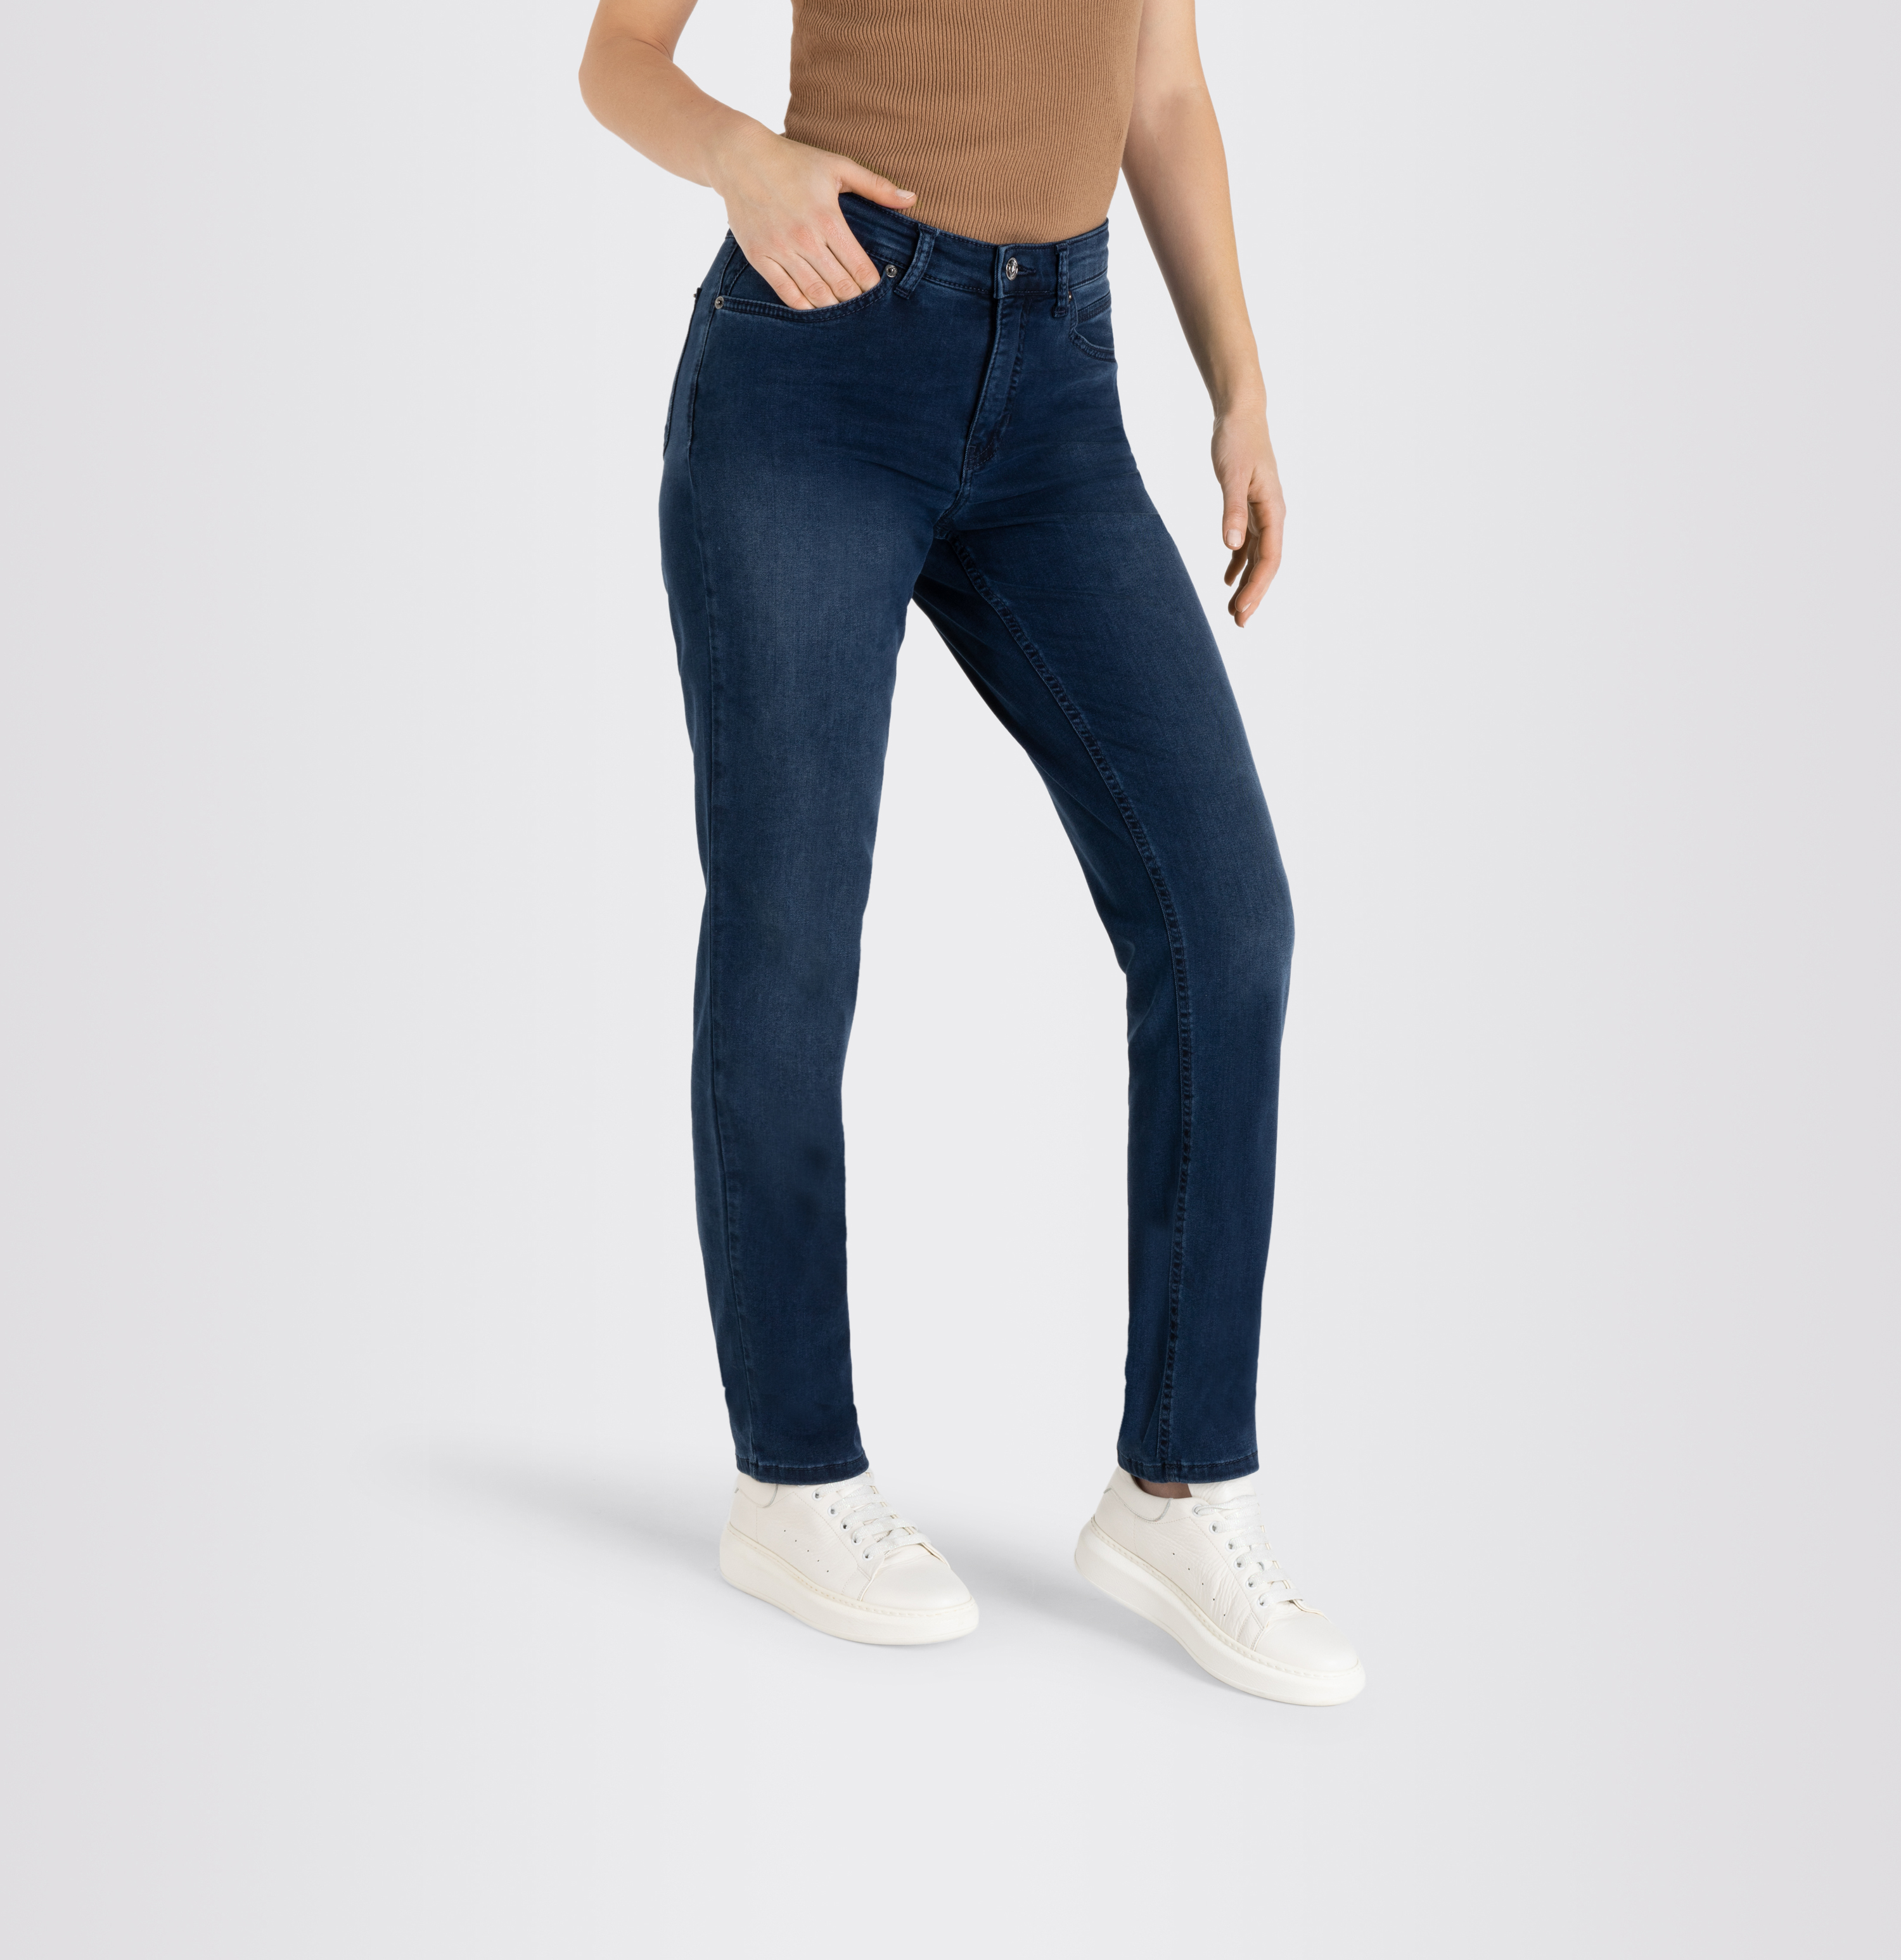 dark Women Melanie, MAC D800 Jeans Soft, | Pants, Super blue Shop - FI